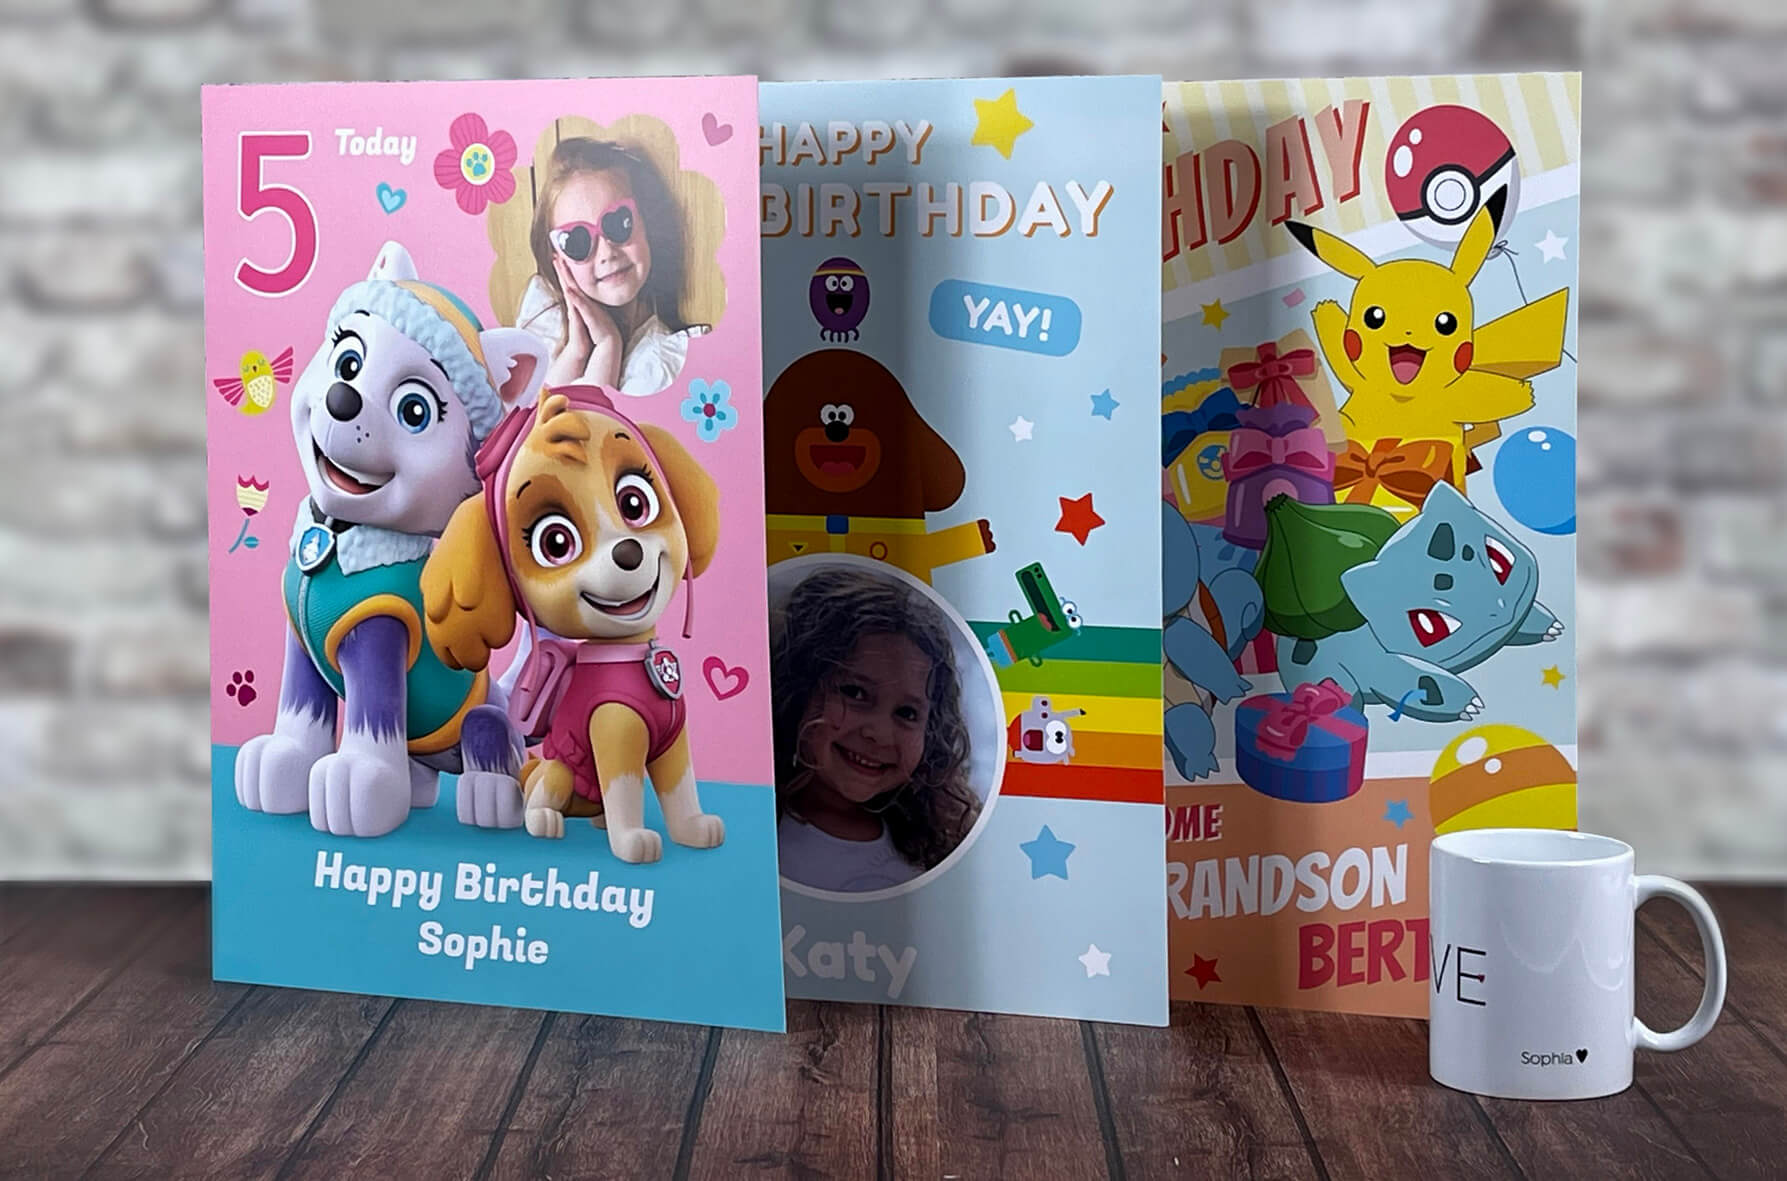 Personalised birthday cards